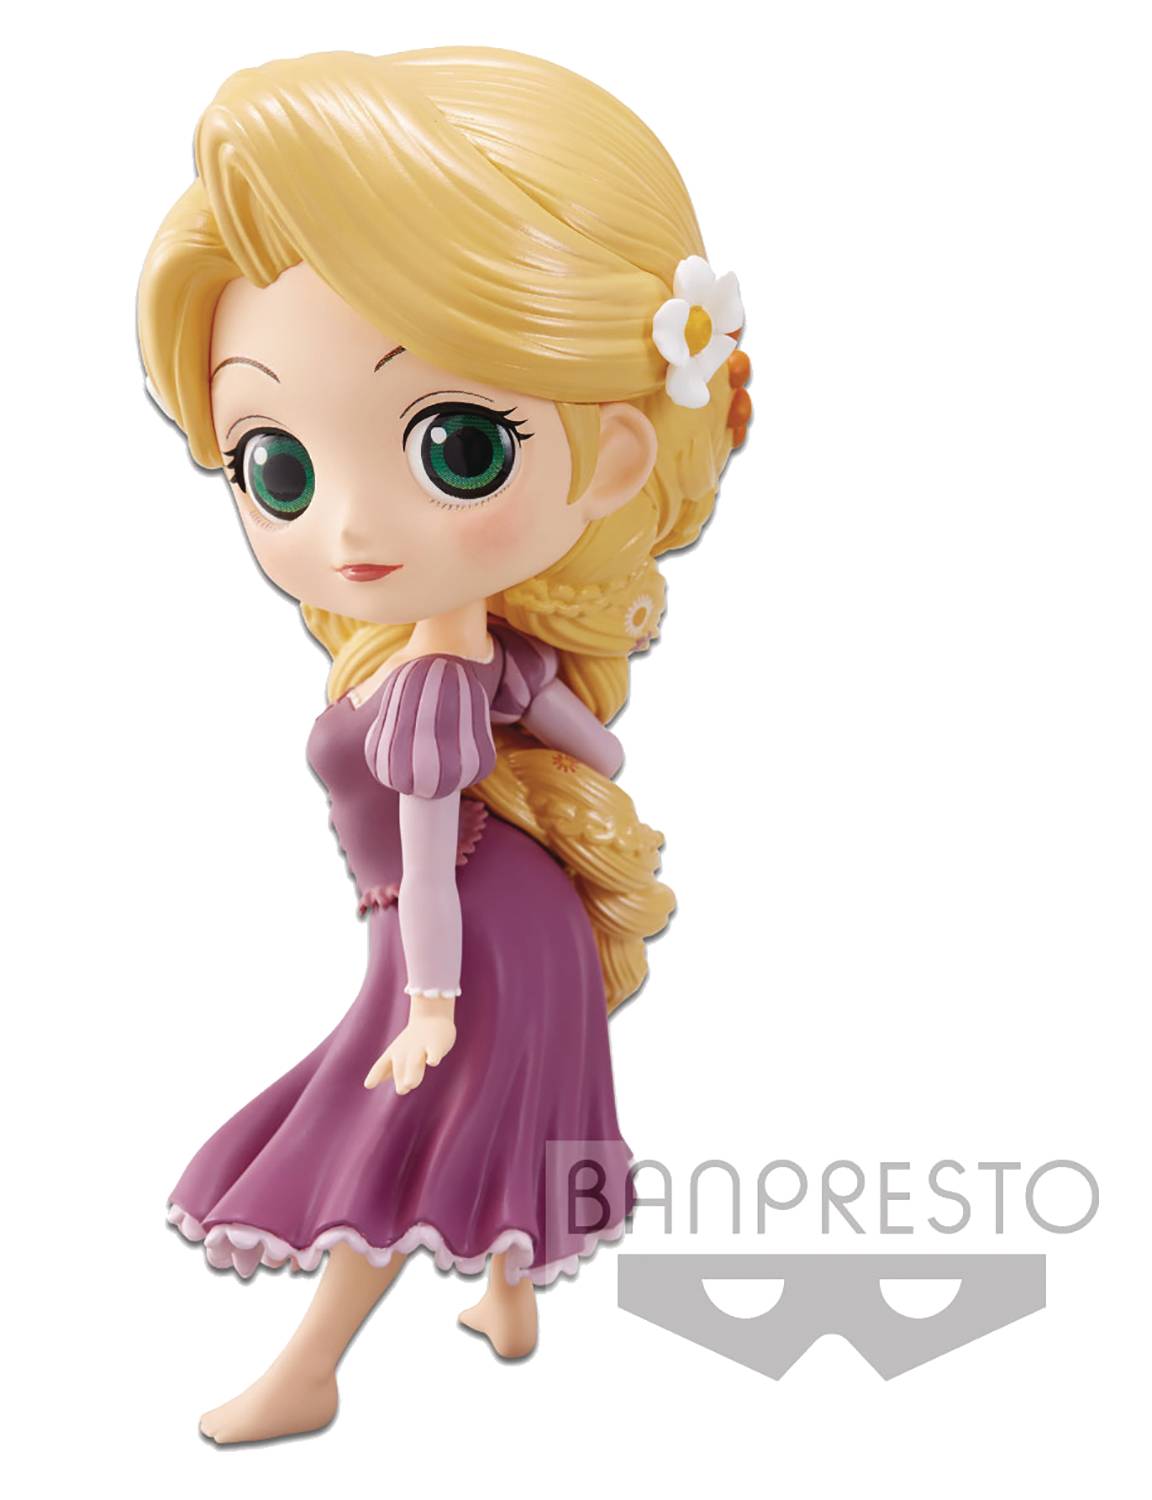 Banpresto Disney Rapunzel Q-Posket Version II Figure